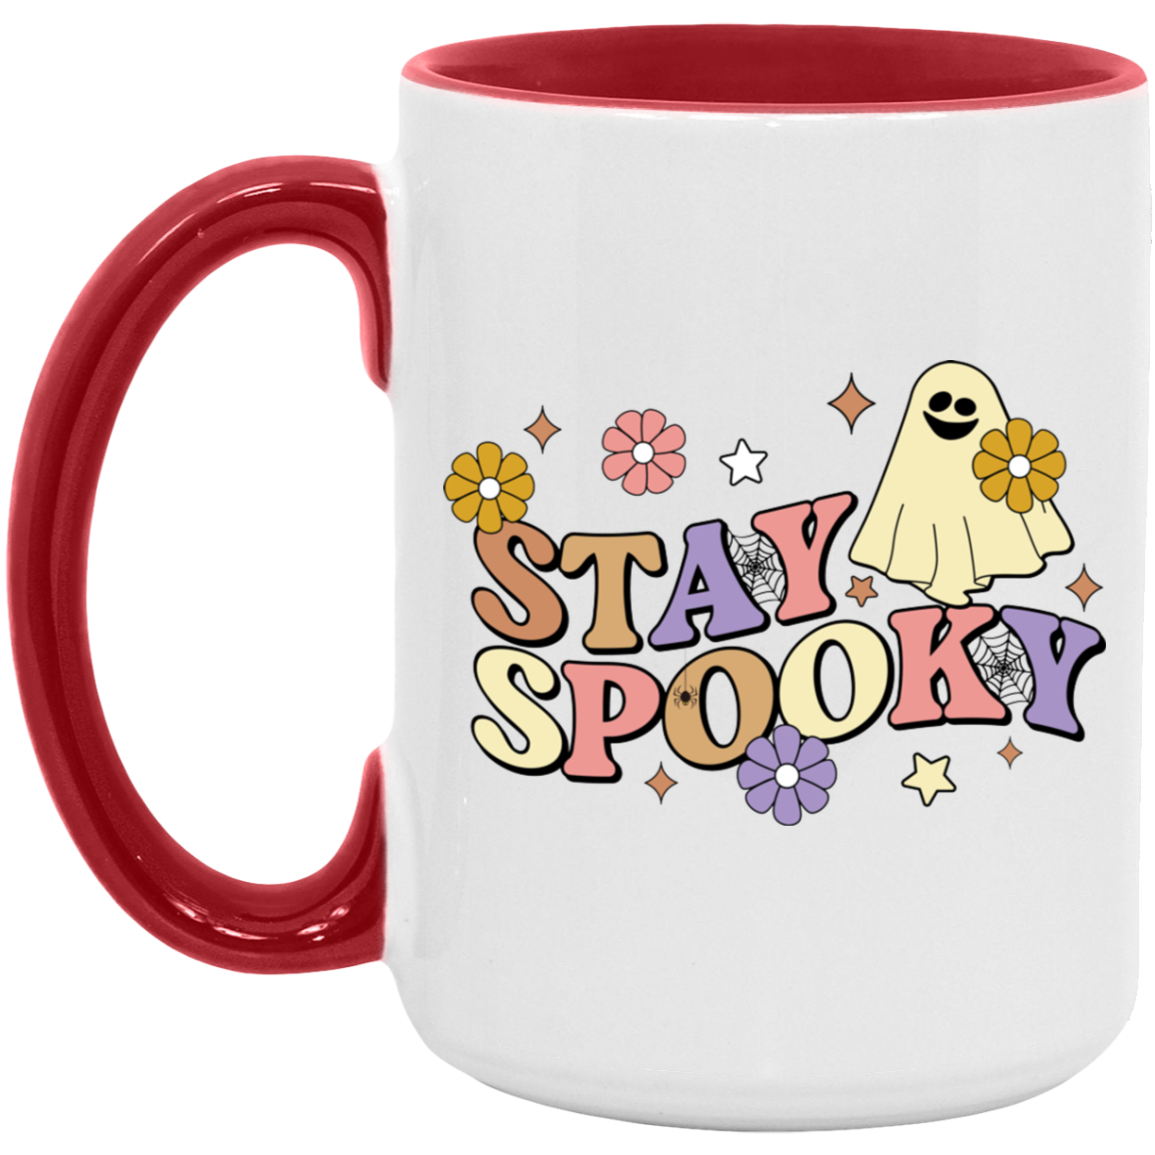 Stay Spooky Flower Ghost Mug